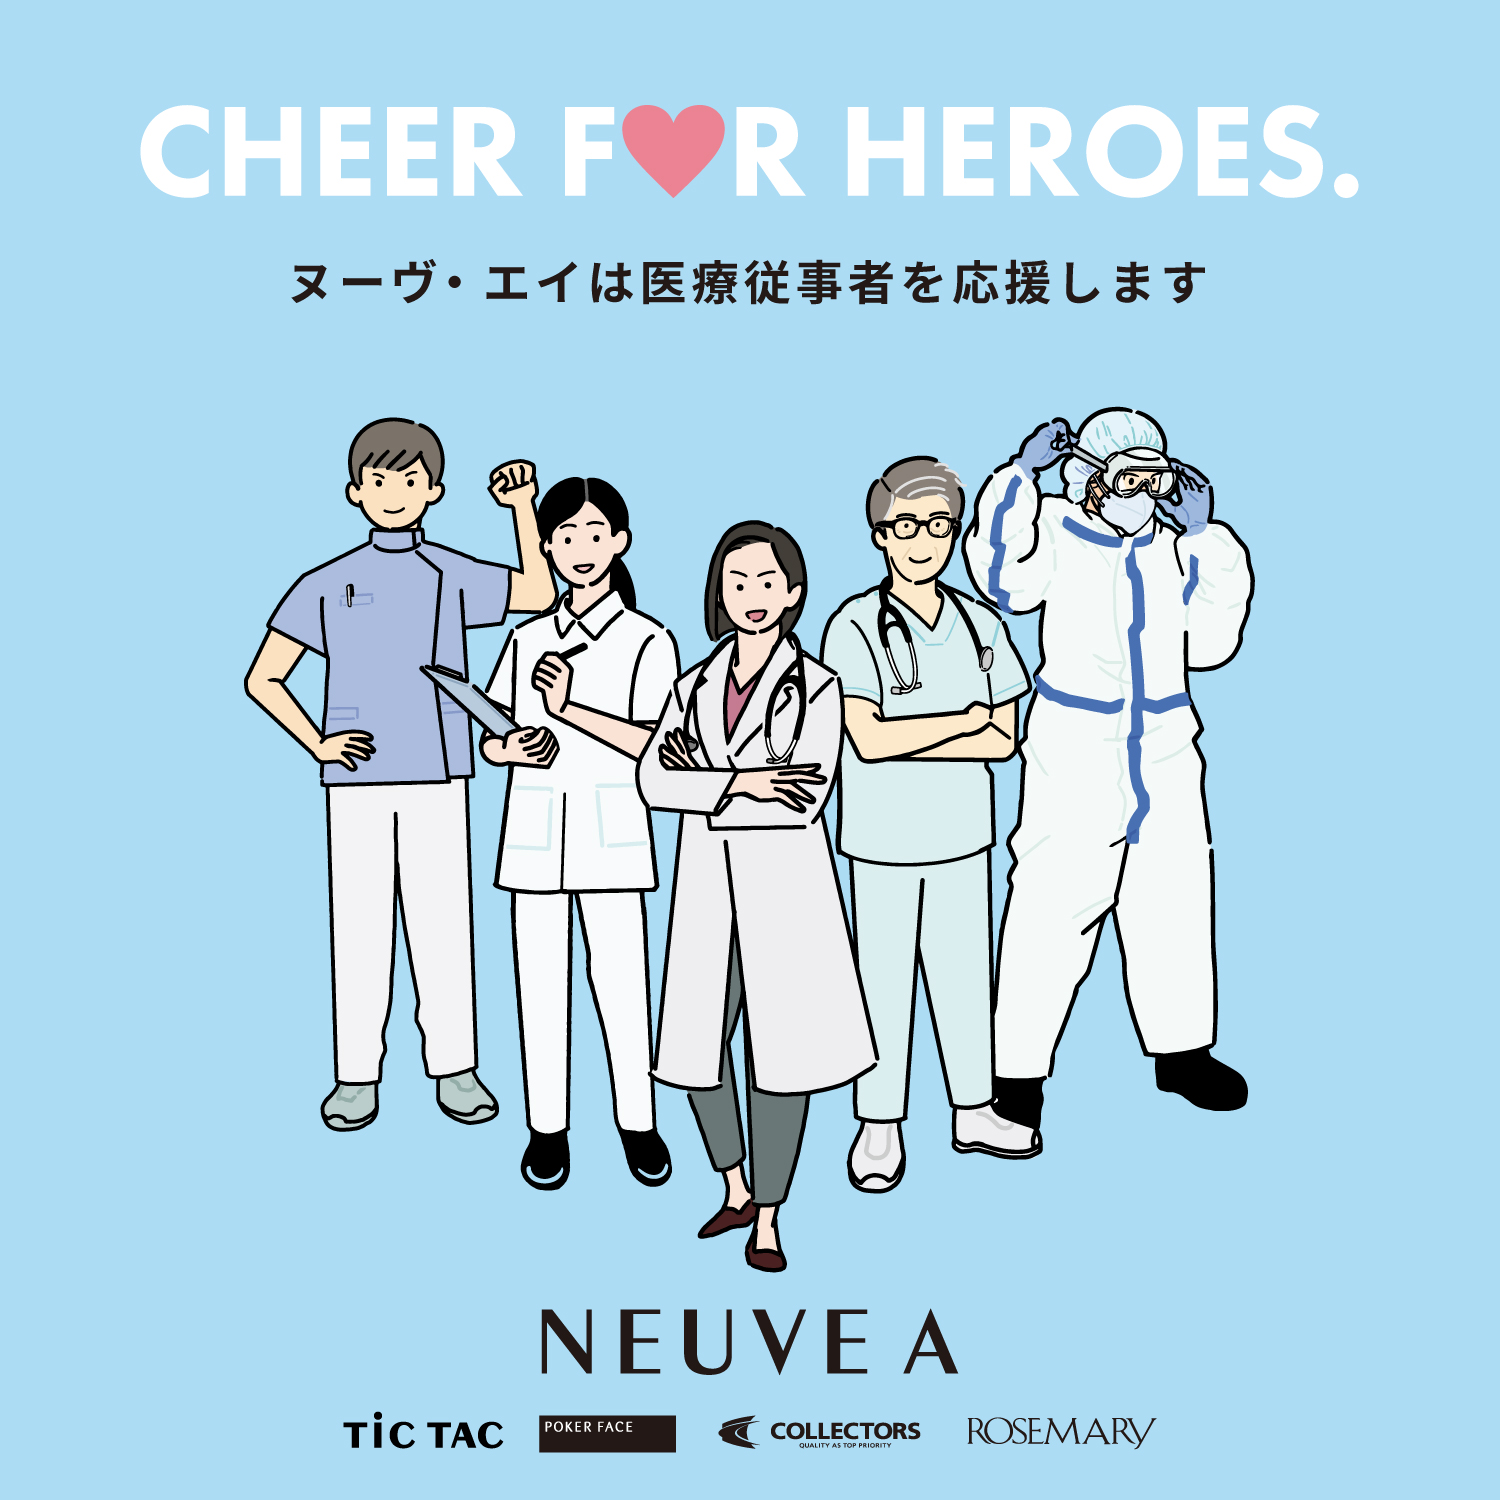 Cheer For Heroes ヌーヴ エイは医療従事者を応援します 株式会社ヌーヴ エイのプレスリリース